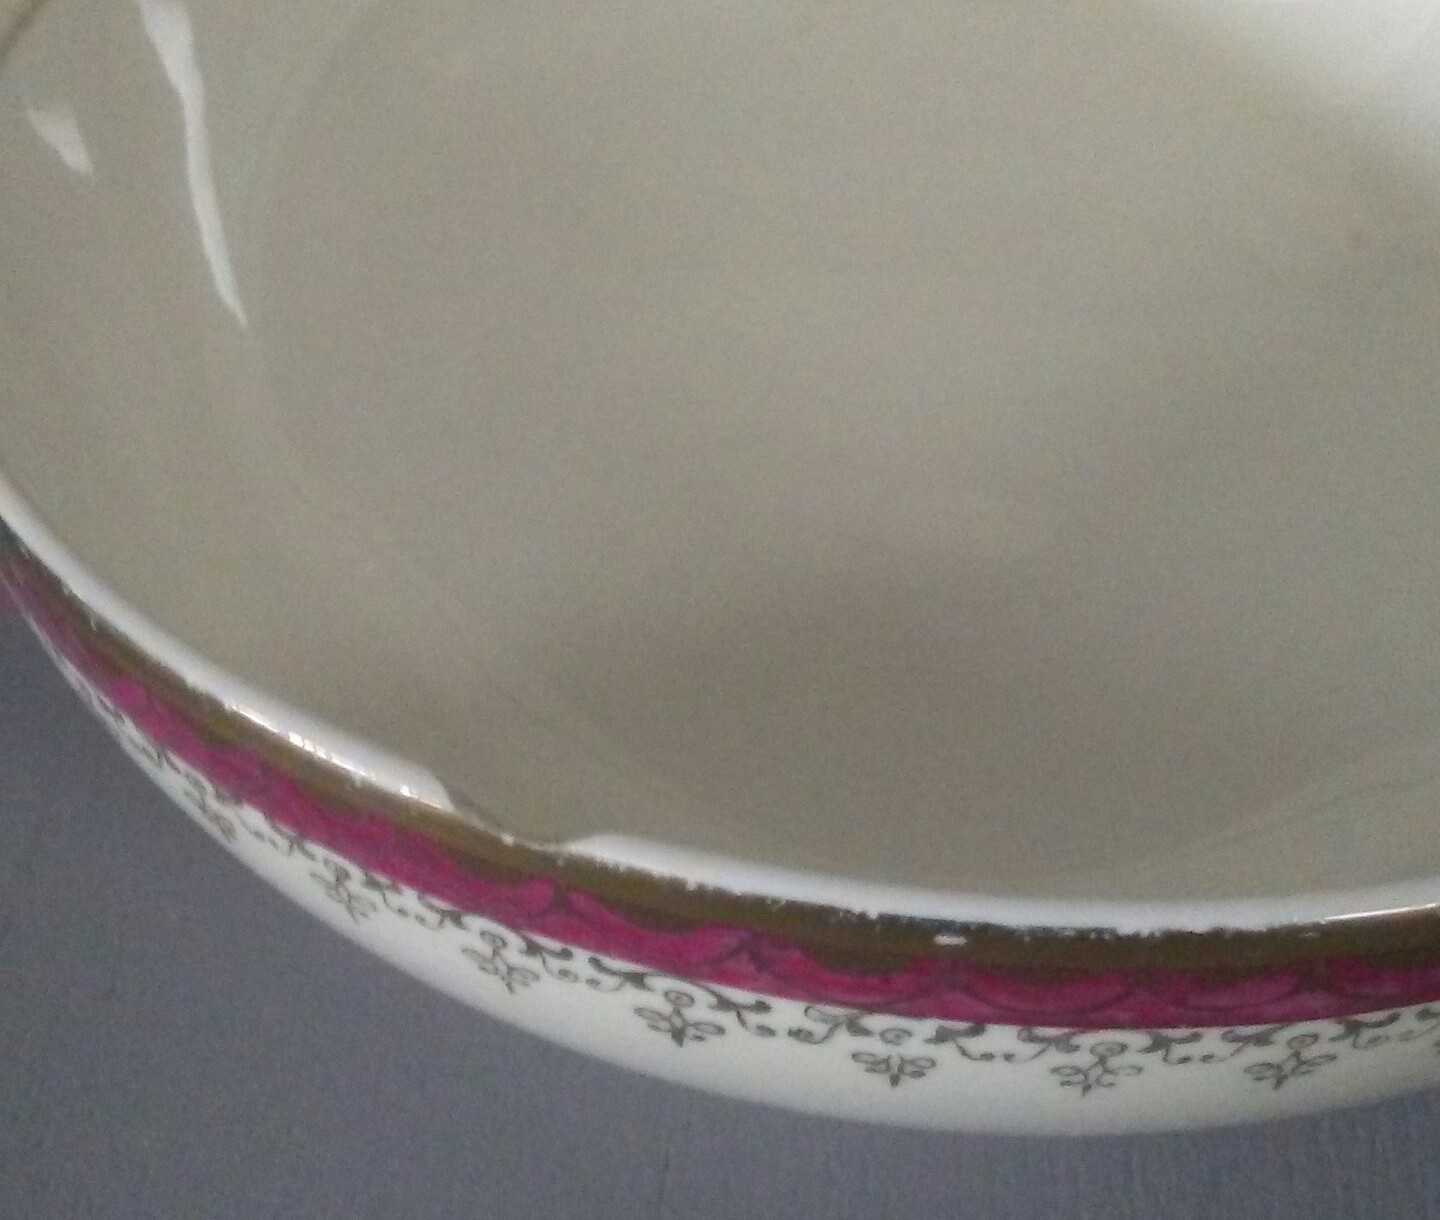 Vintage Lug BowlsHomer Laughlin Nautilus Ferndale Pattern Eggshell China L49N5Rare bowls Perfect ConditionSet of Four